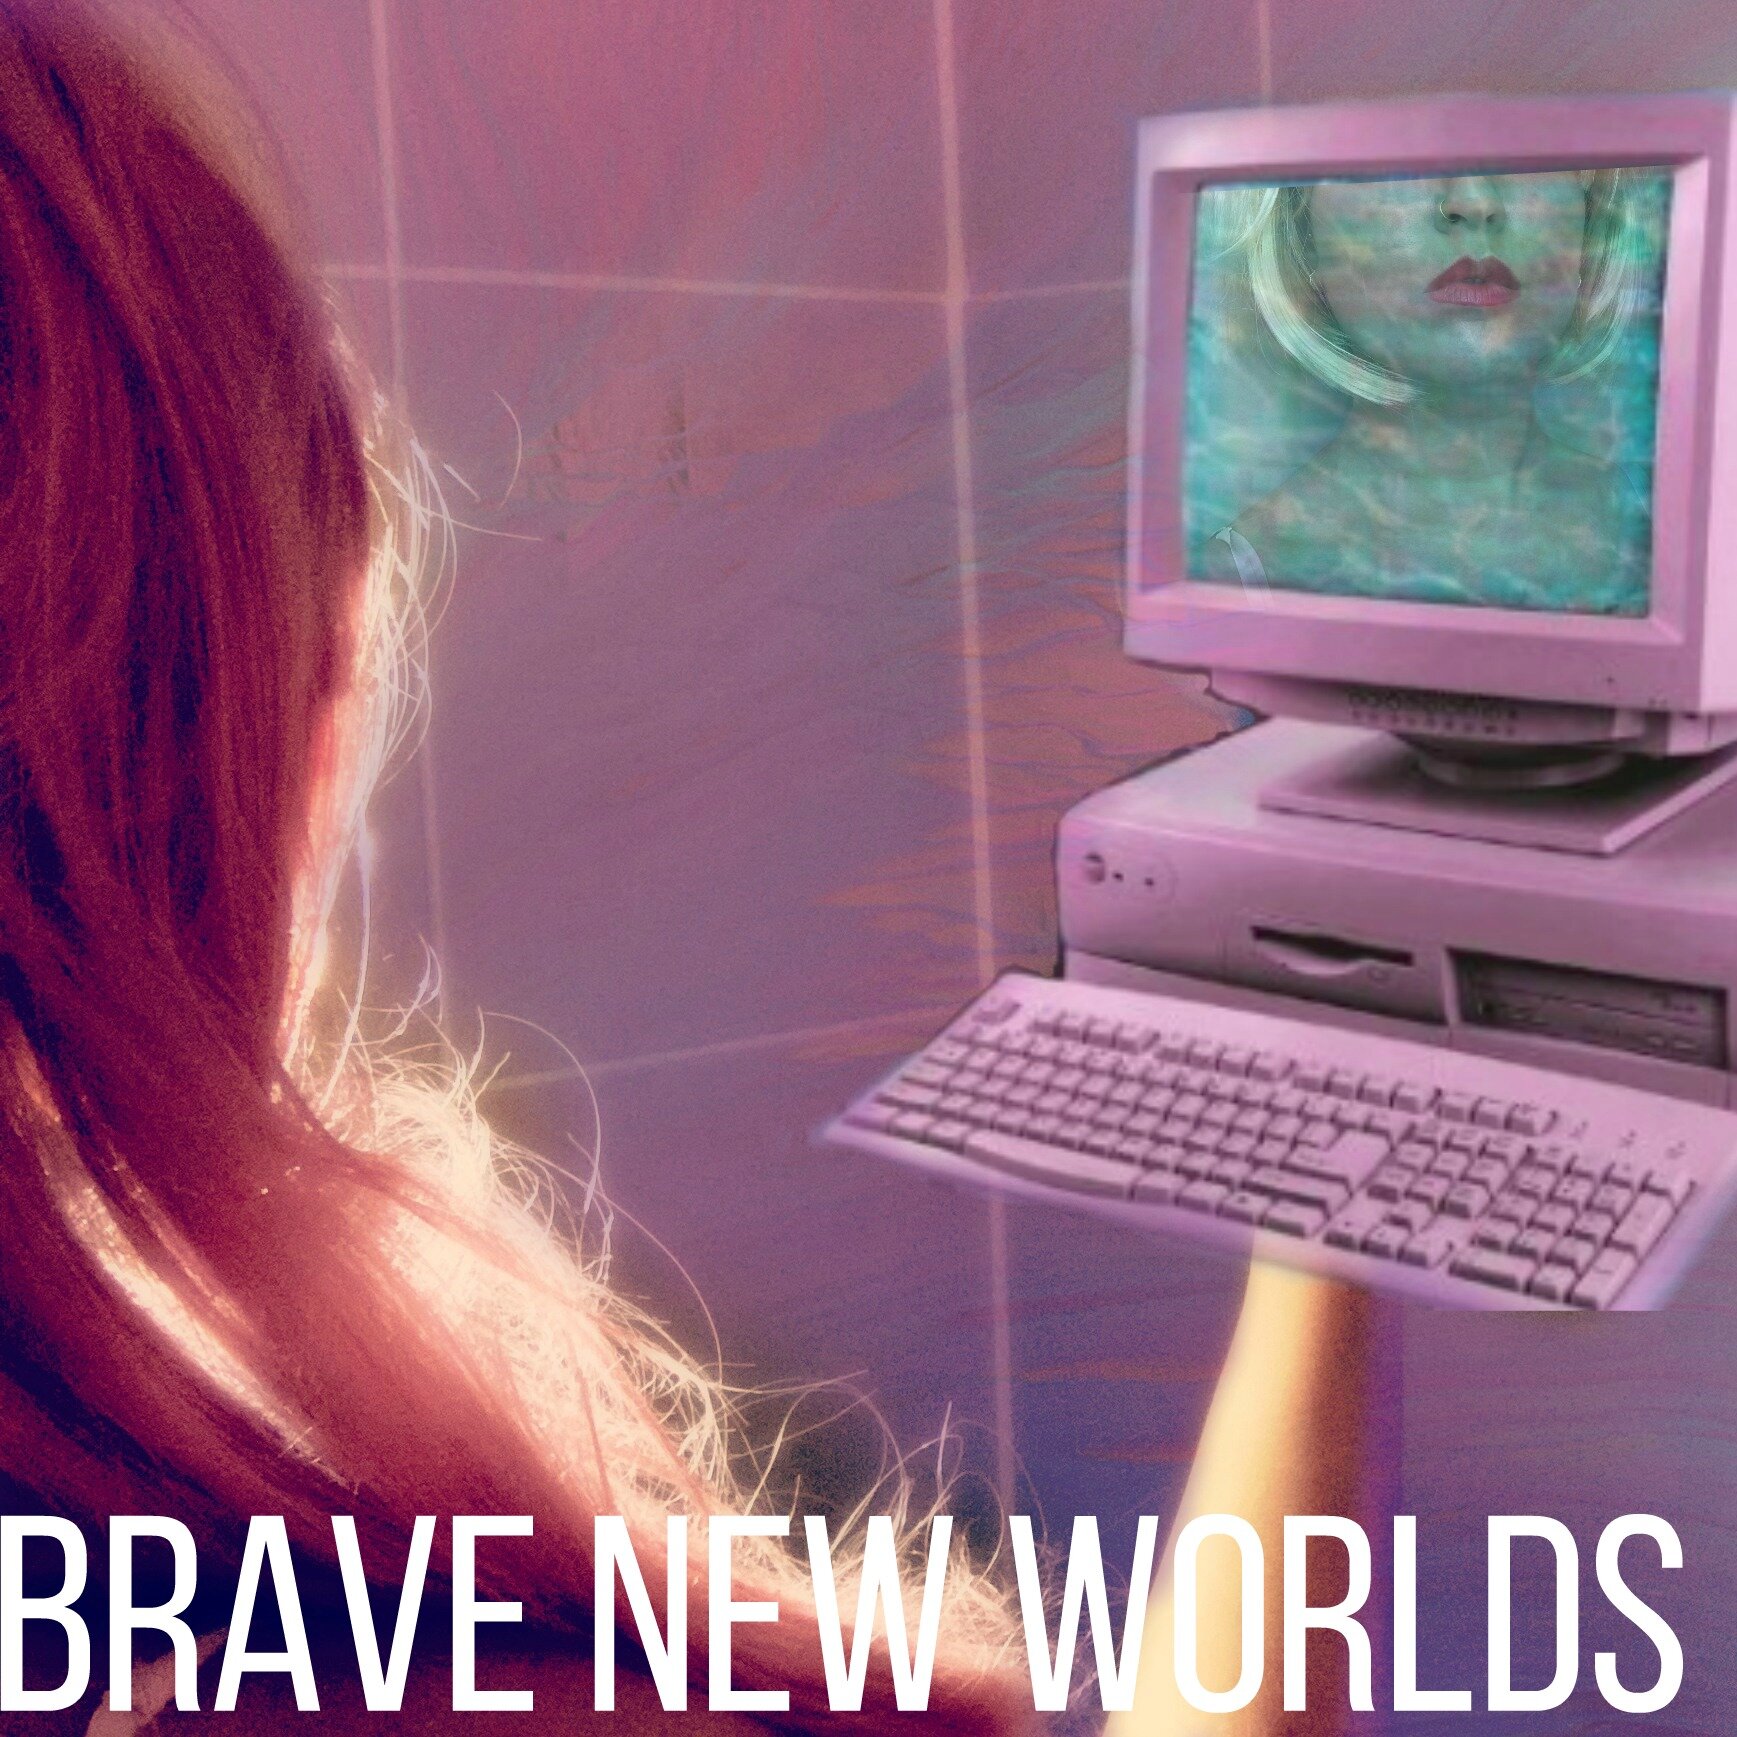 bravenewworldsimage-scaled (1).jpg